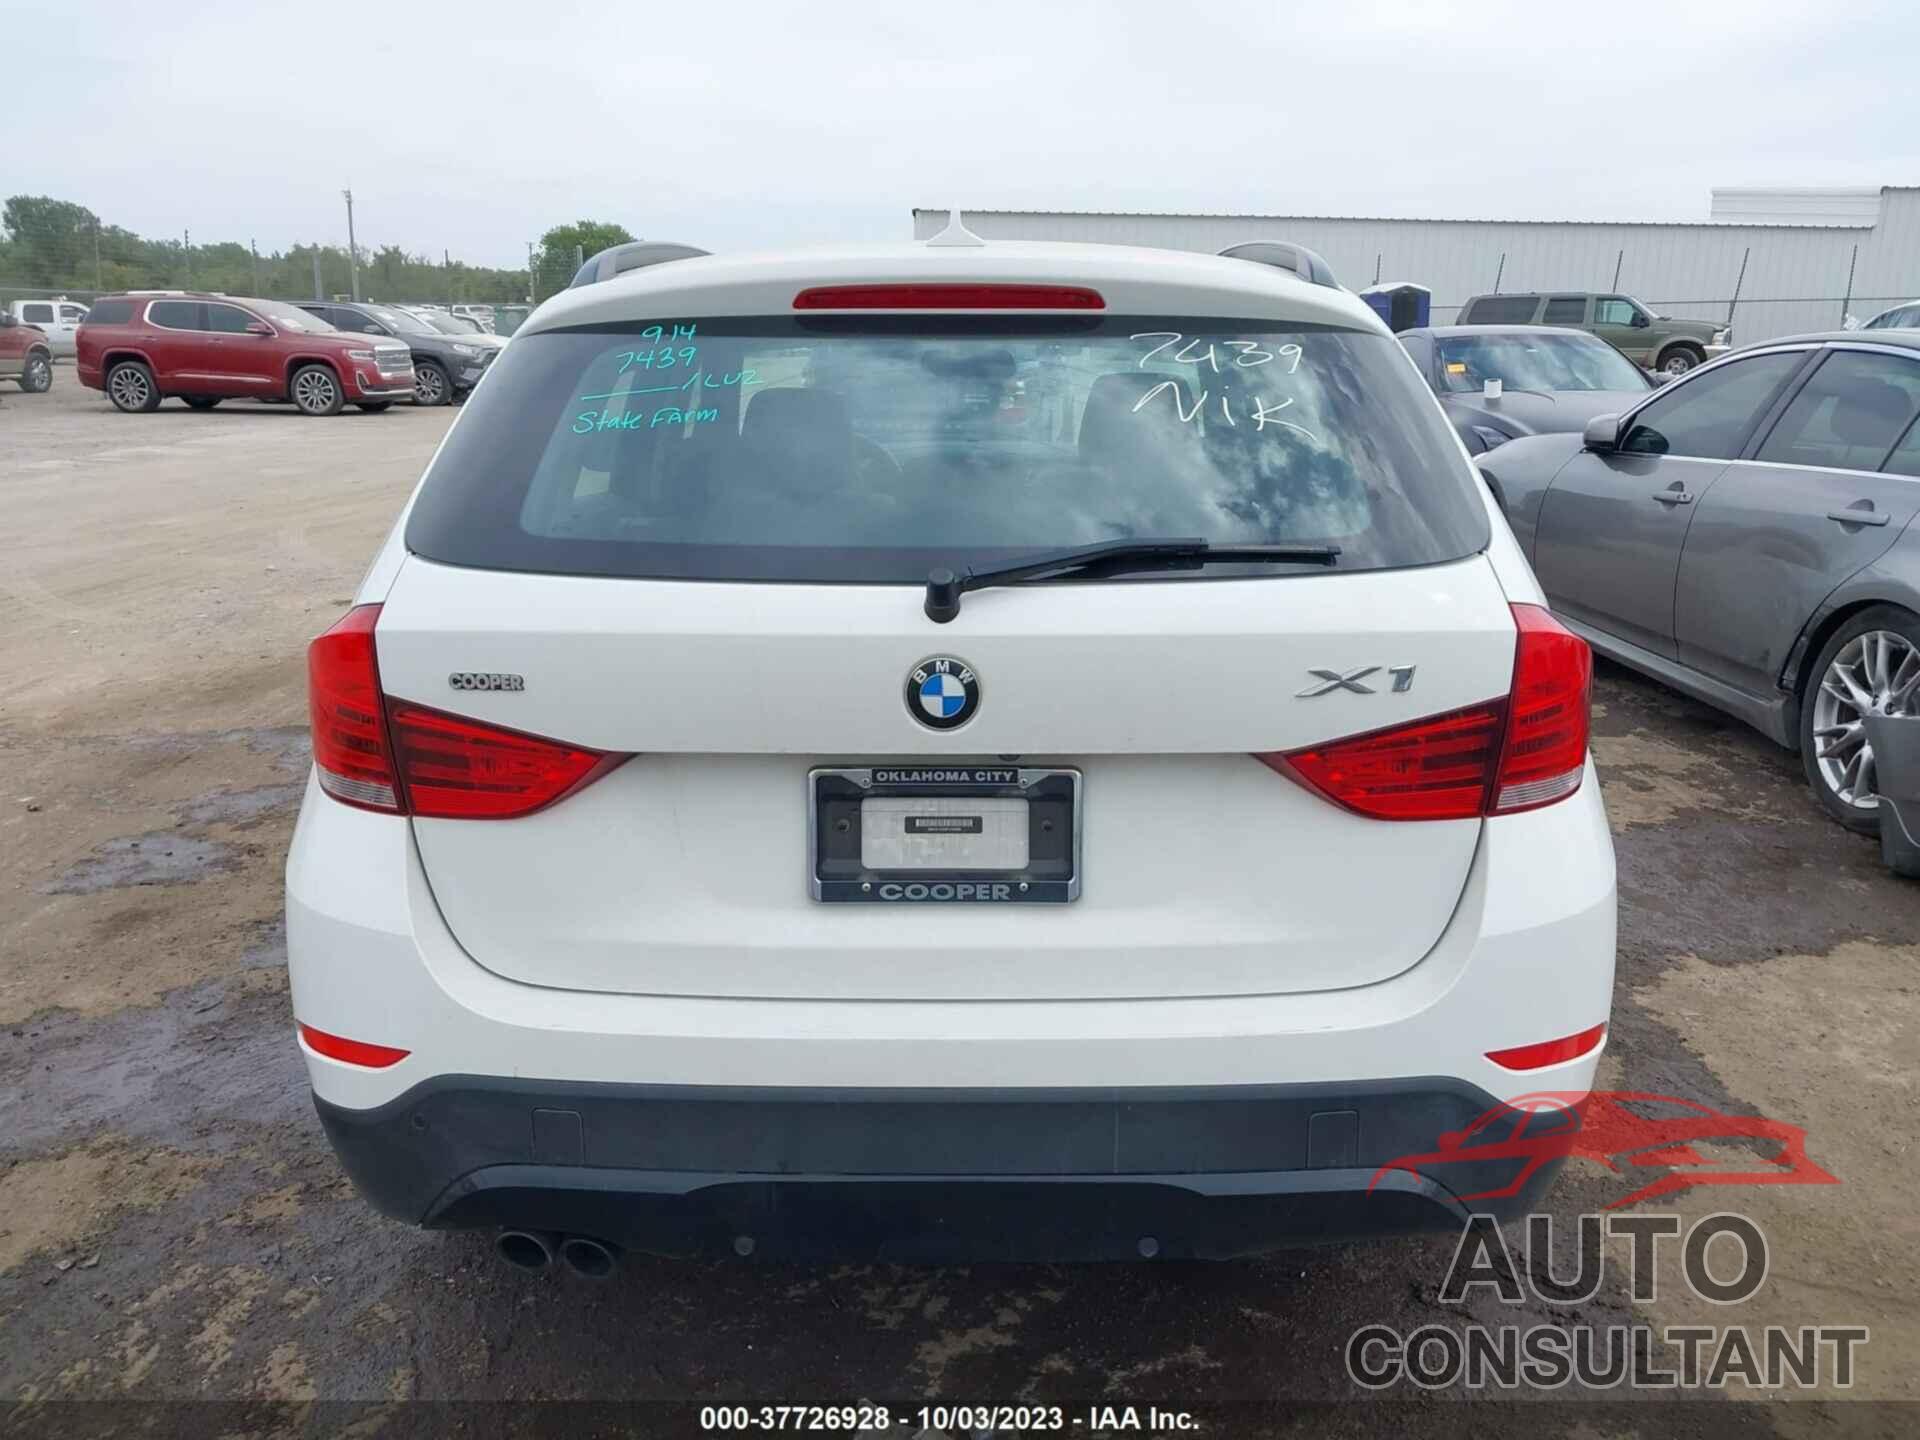 BMW X1 2015 - WBAVL1C53FVY26280